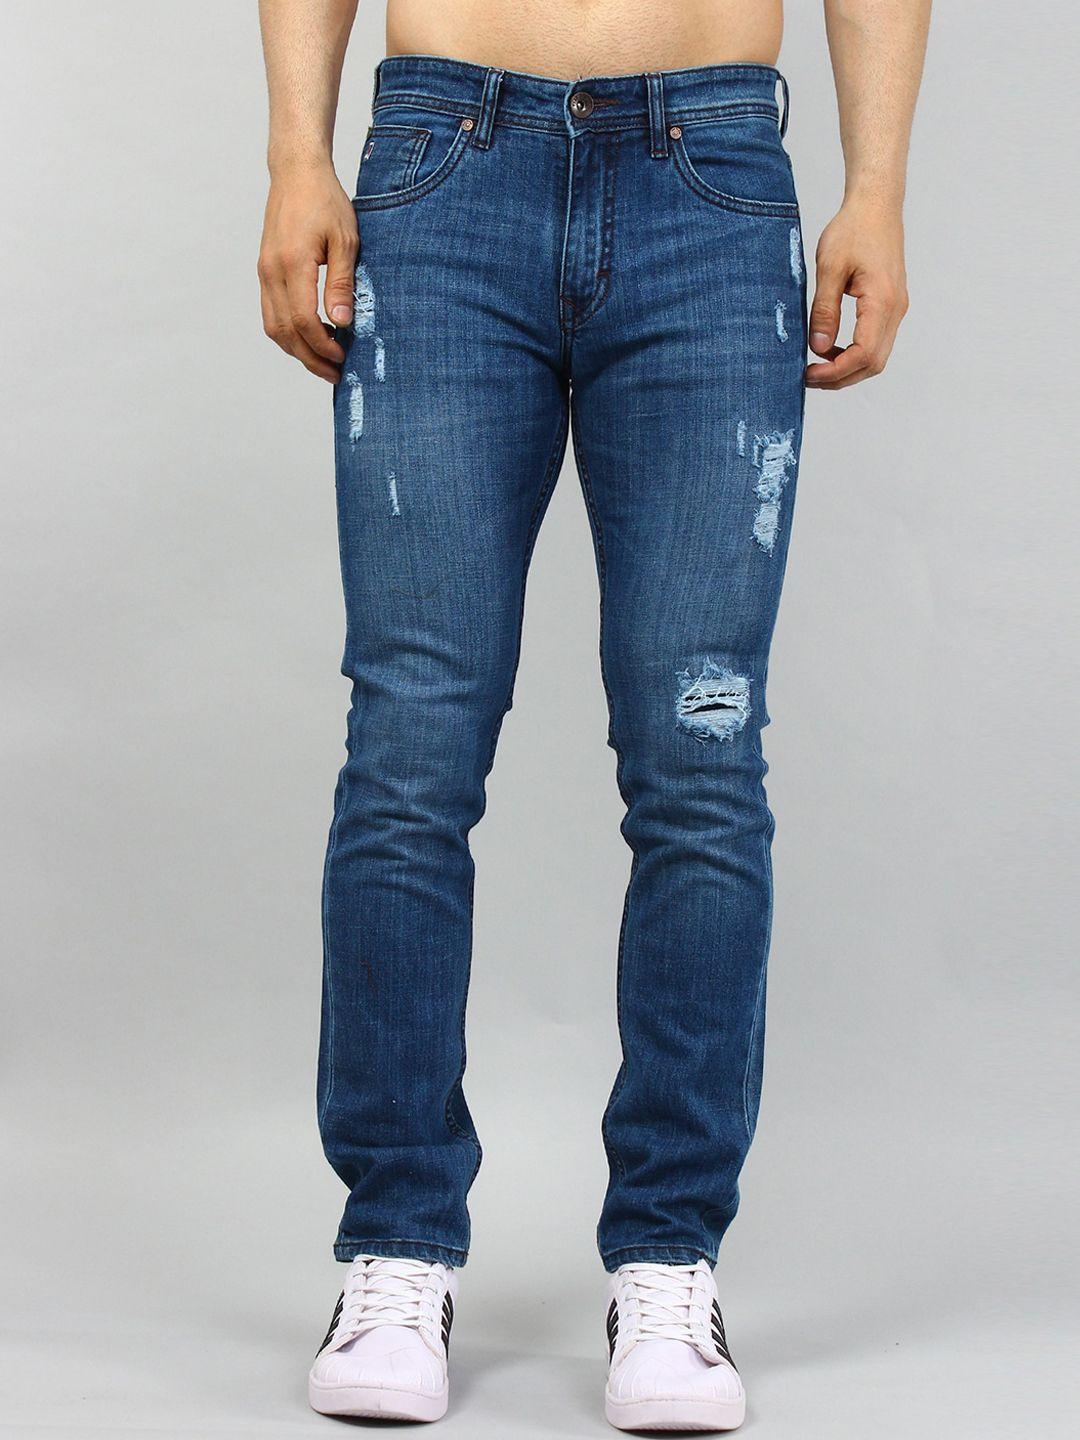 tim-paris-comfort-mildly-distressed-light-fade-mid-rise-regular-fit-stretchable-jeans